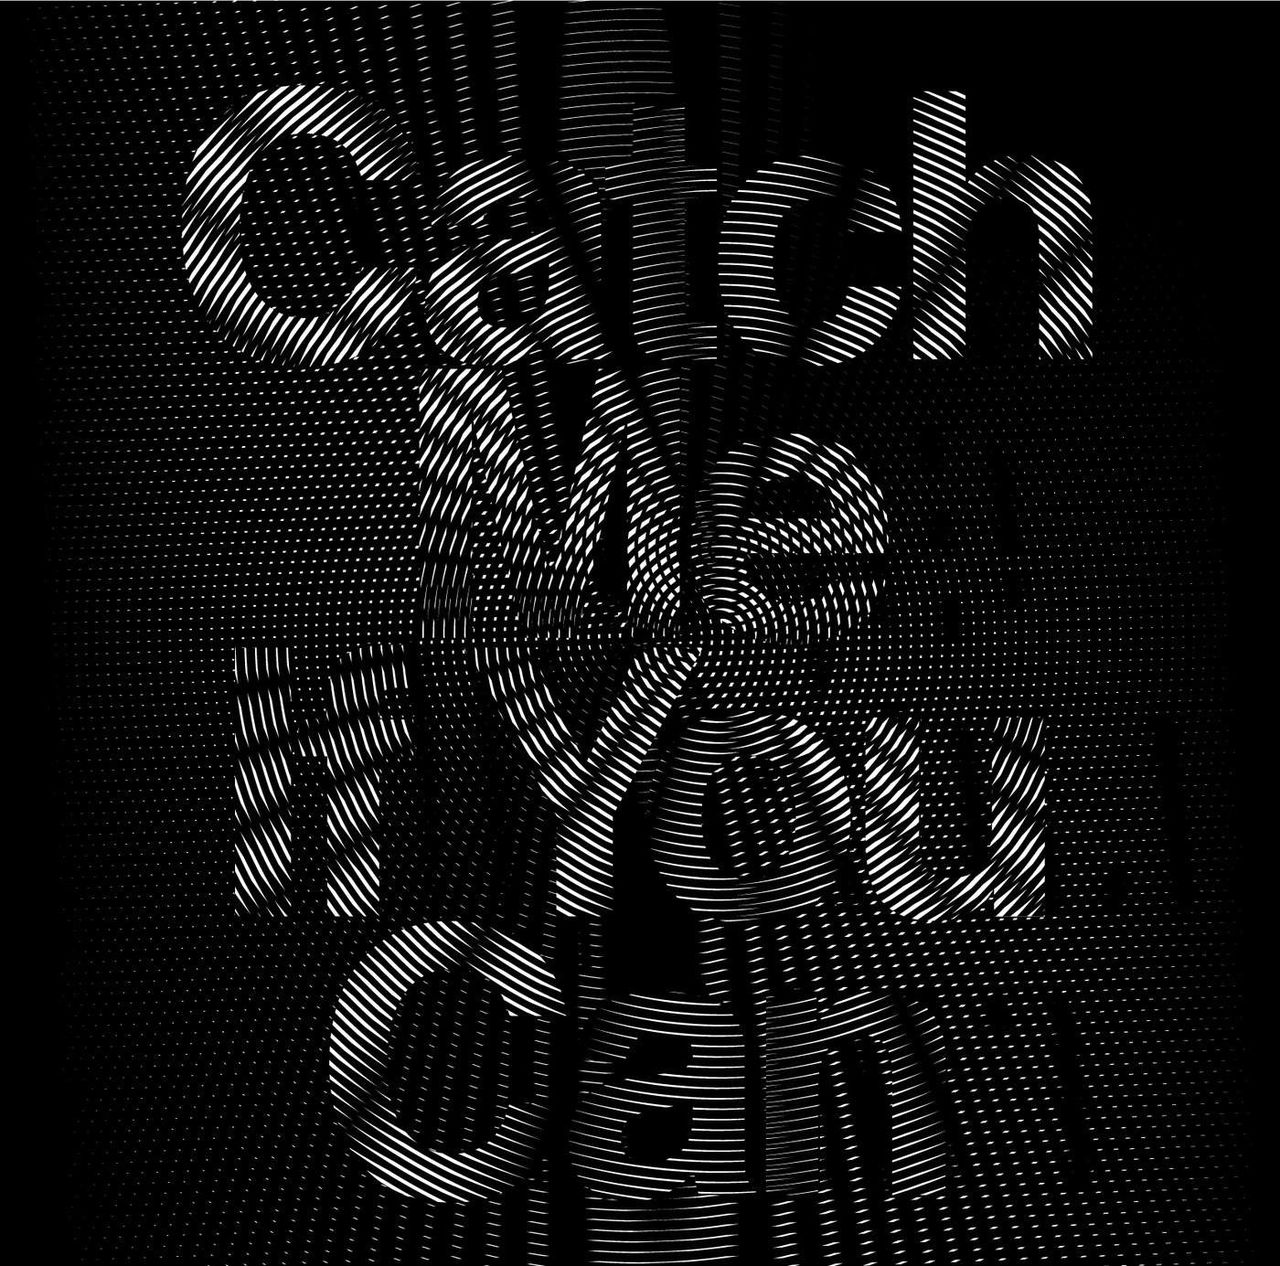 catch me if you can(少女時代演唱歌曲)